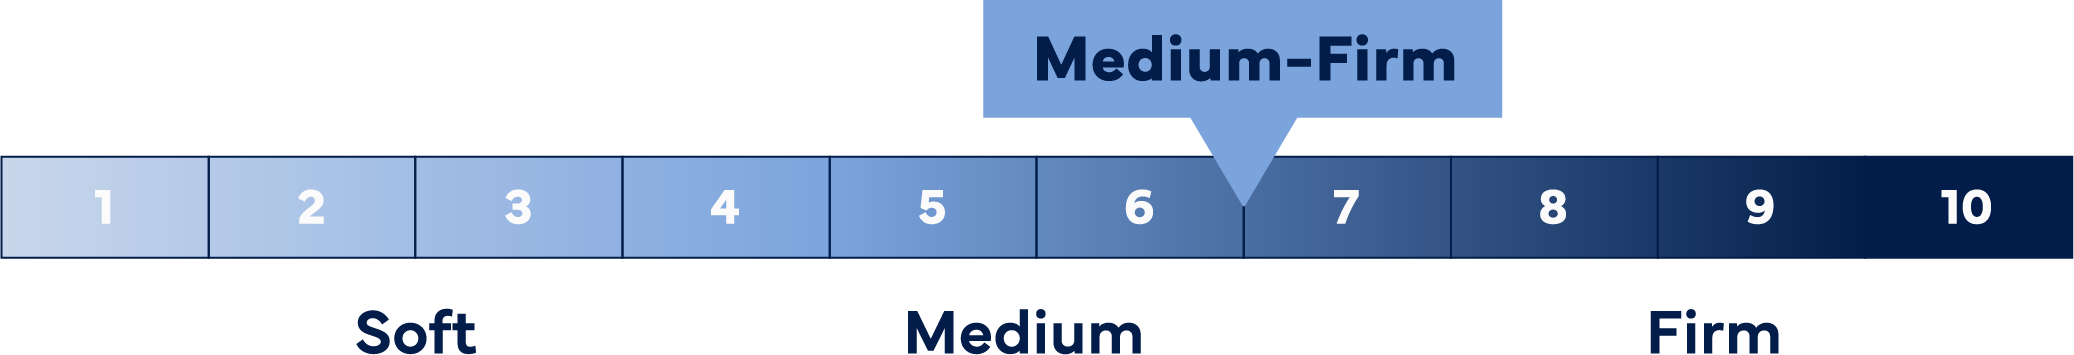 6.5 / 10: Medium-Firm